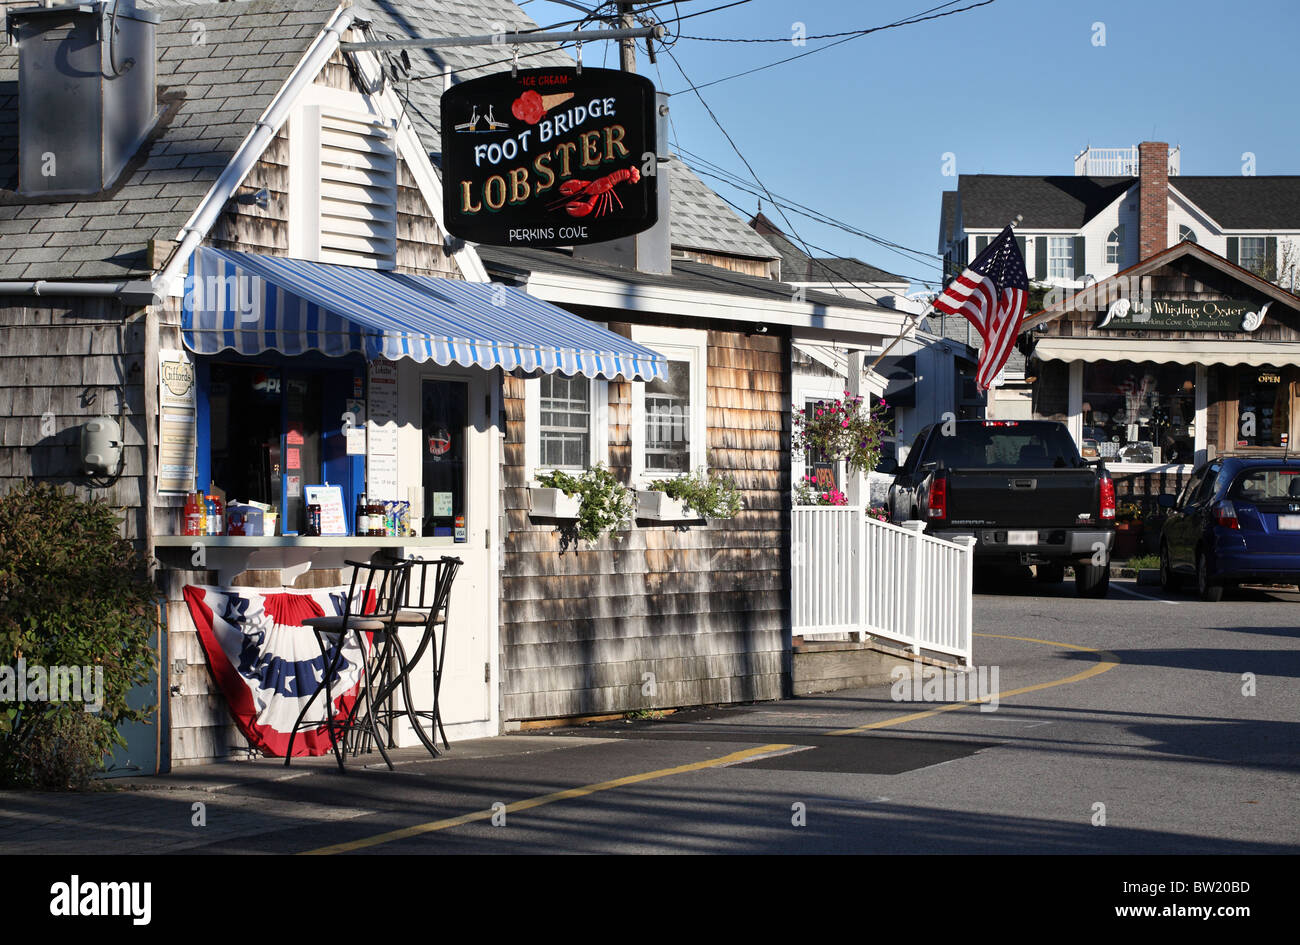 The Foot Bridge Lobster take away shop in Perkins Cove, Ogunquit, Maine, USA Stock Photo